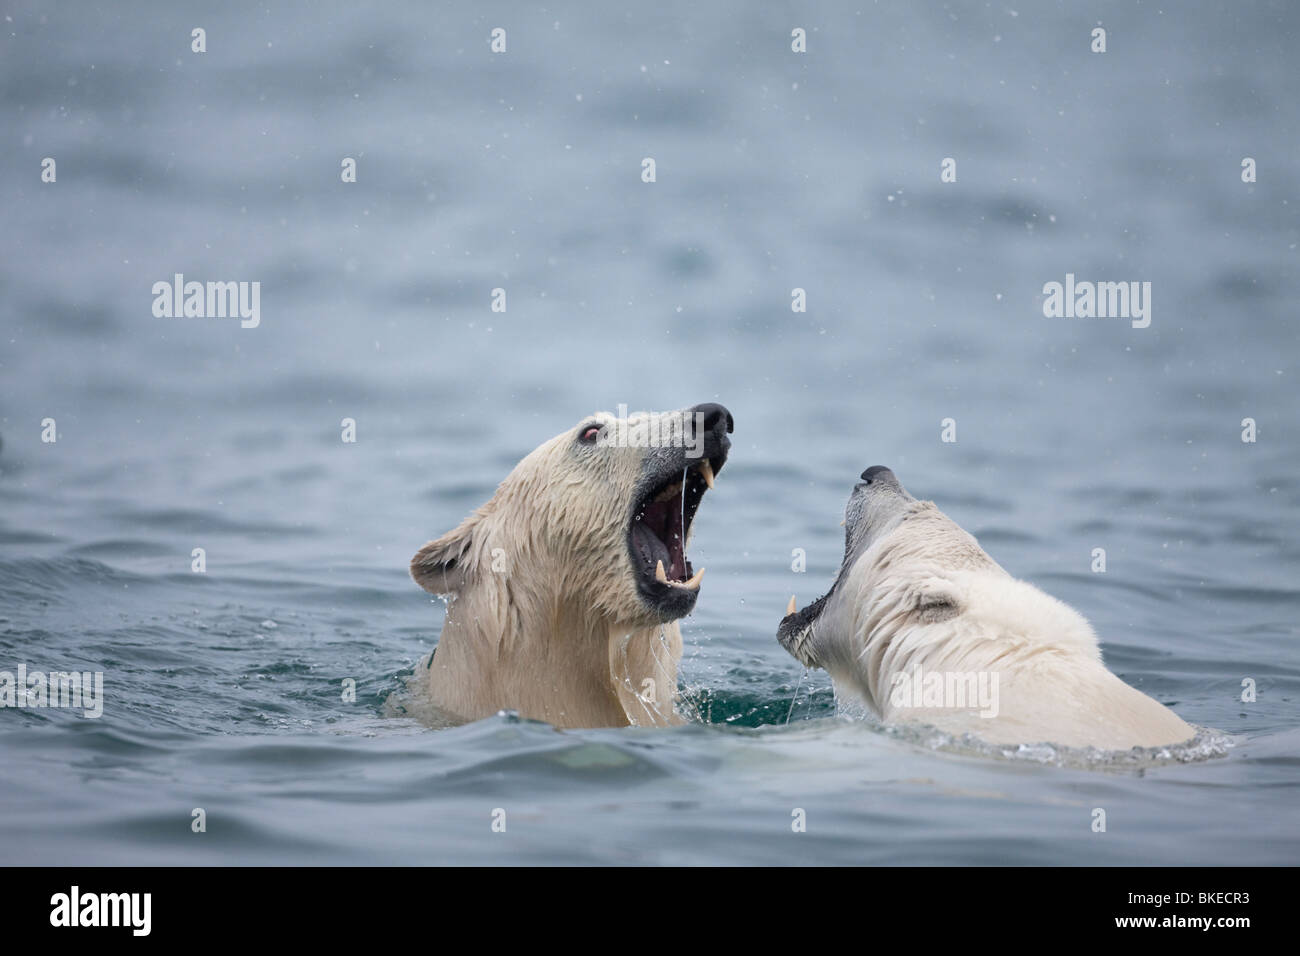 Norway, Svalbard, Spitsbergen Island, Polar Bears (Ursus maritimus) play fighting while swimming in cold sea Stock Photo